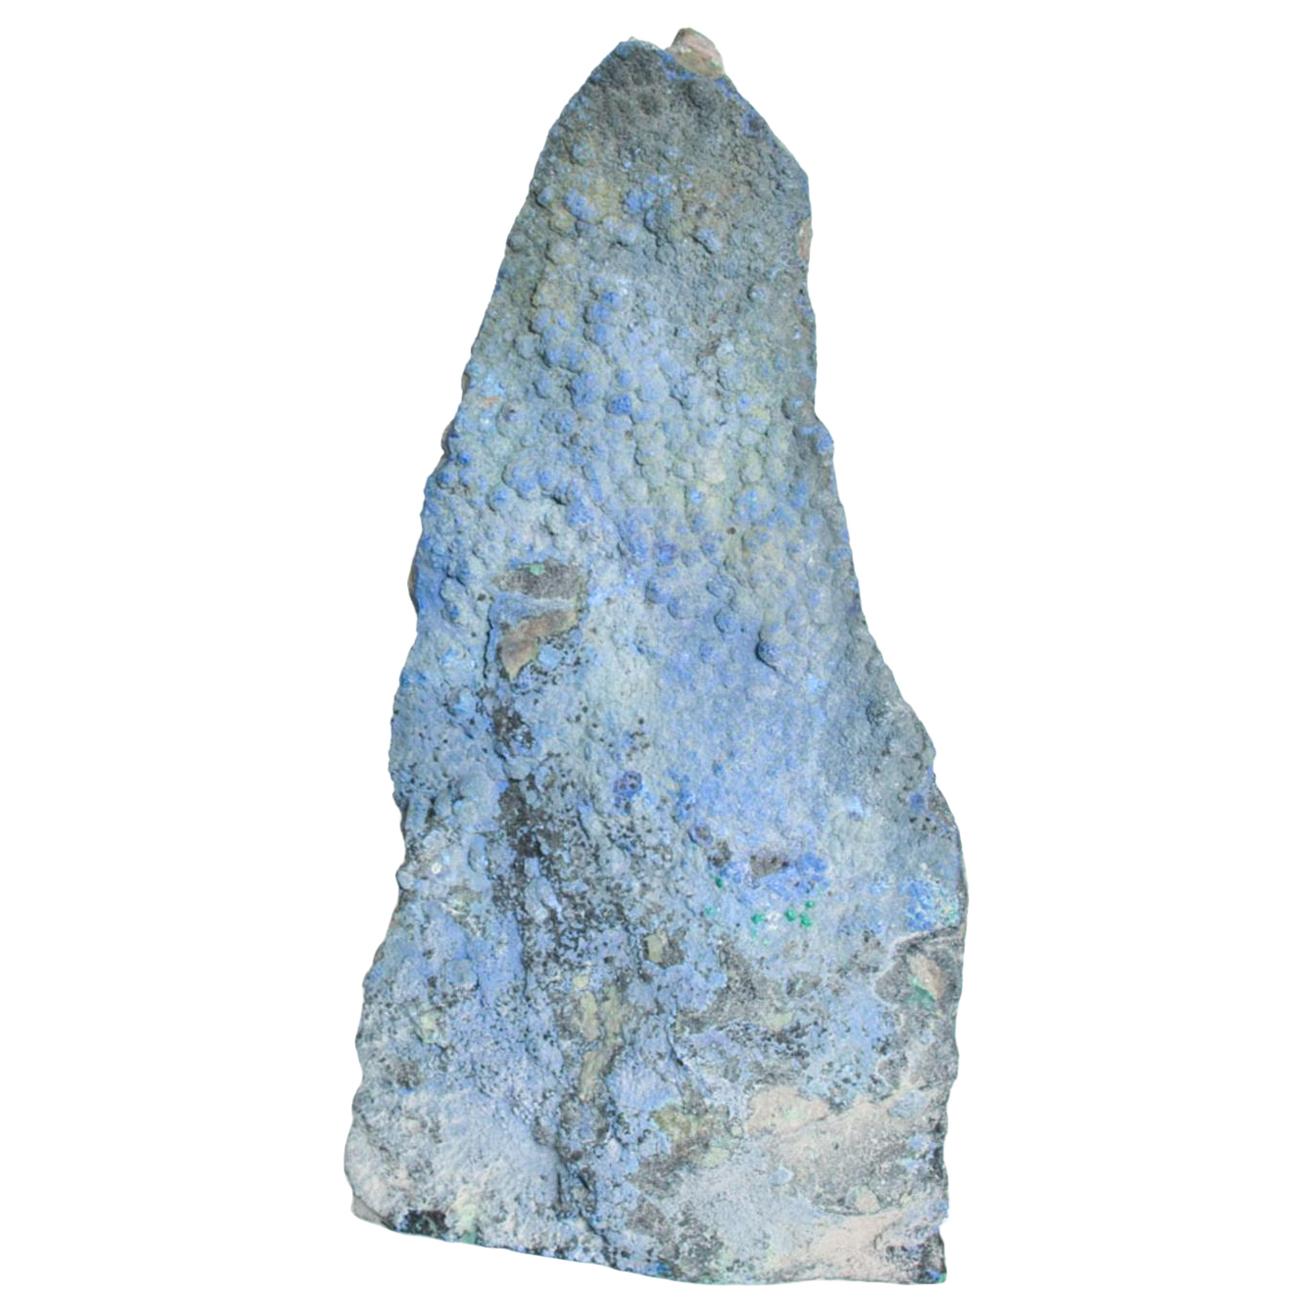 Mid-Century Modern Azurite Stone Bookend